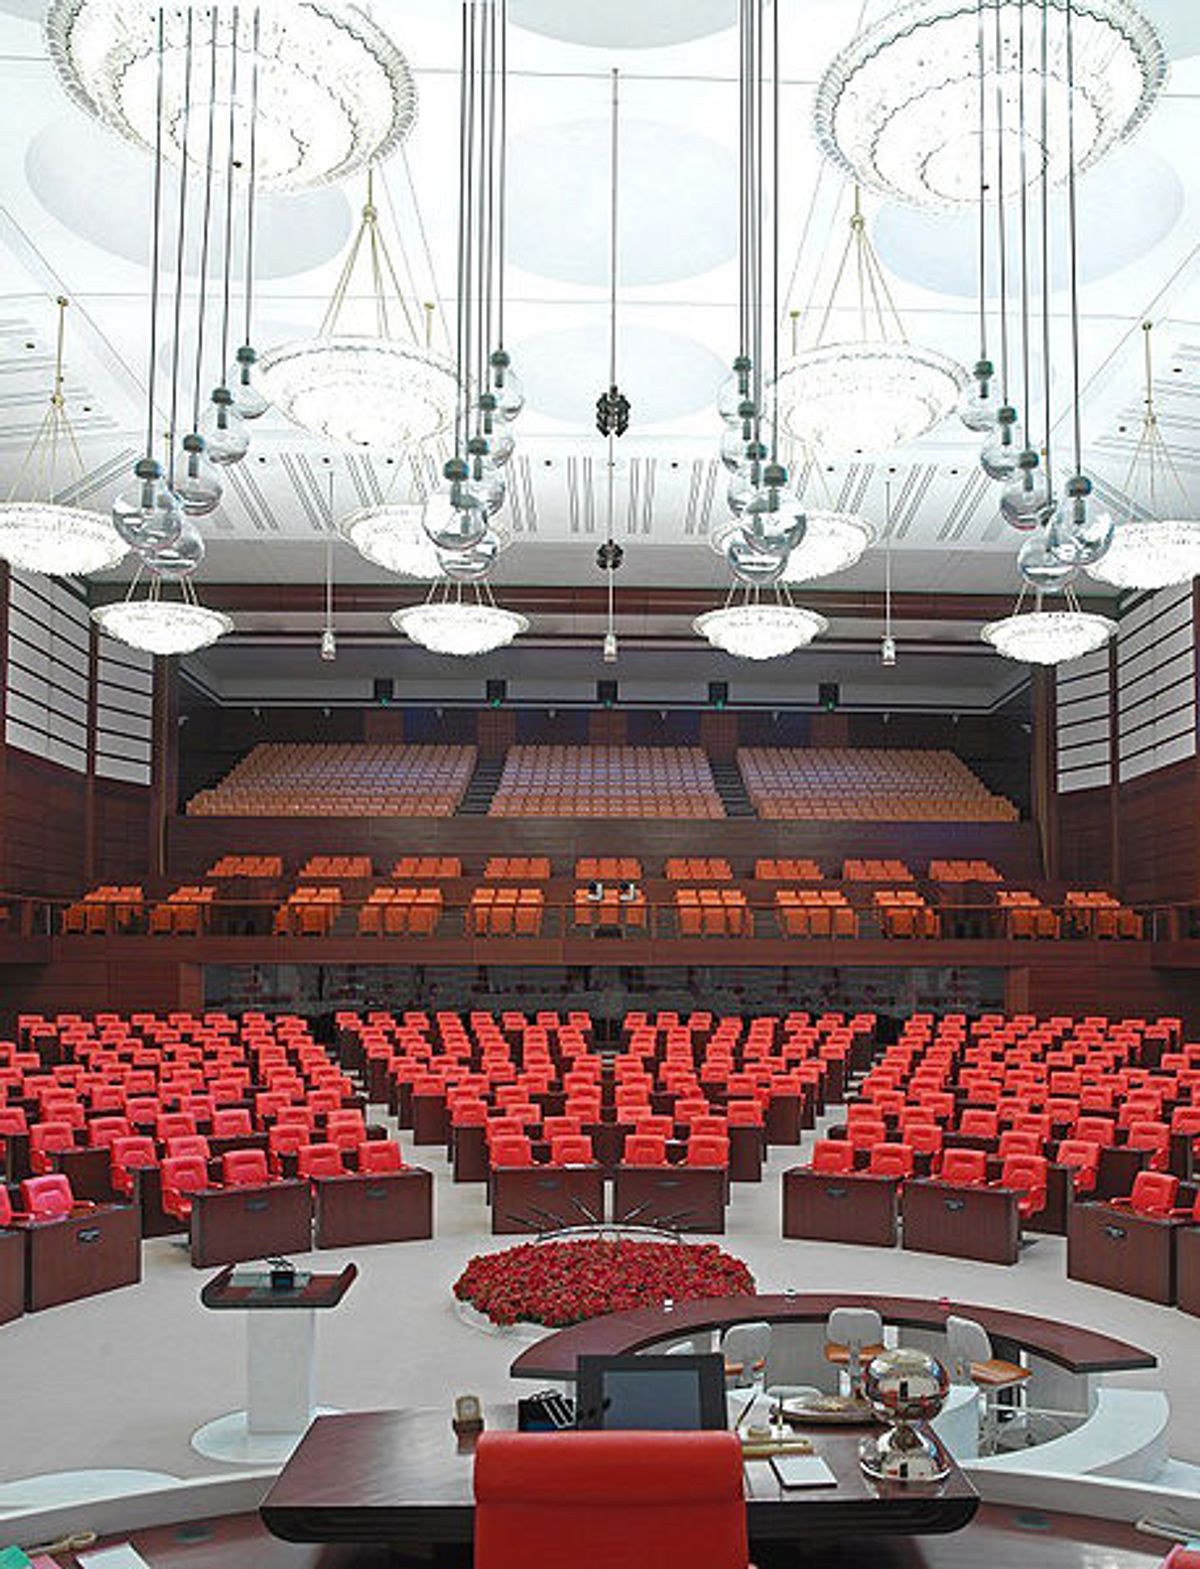 Inside of the Turkish Parliament in capital city Ankara